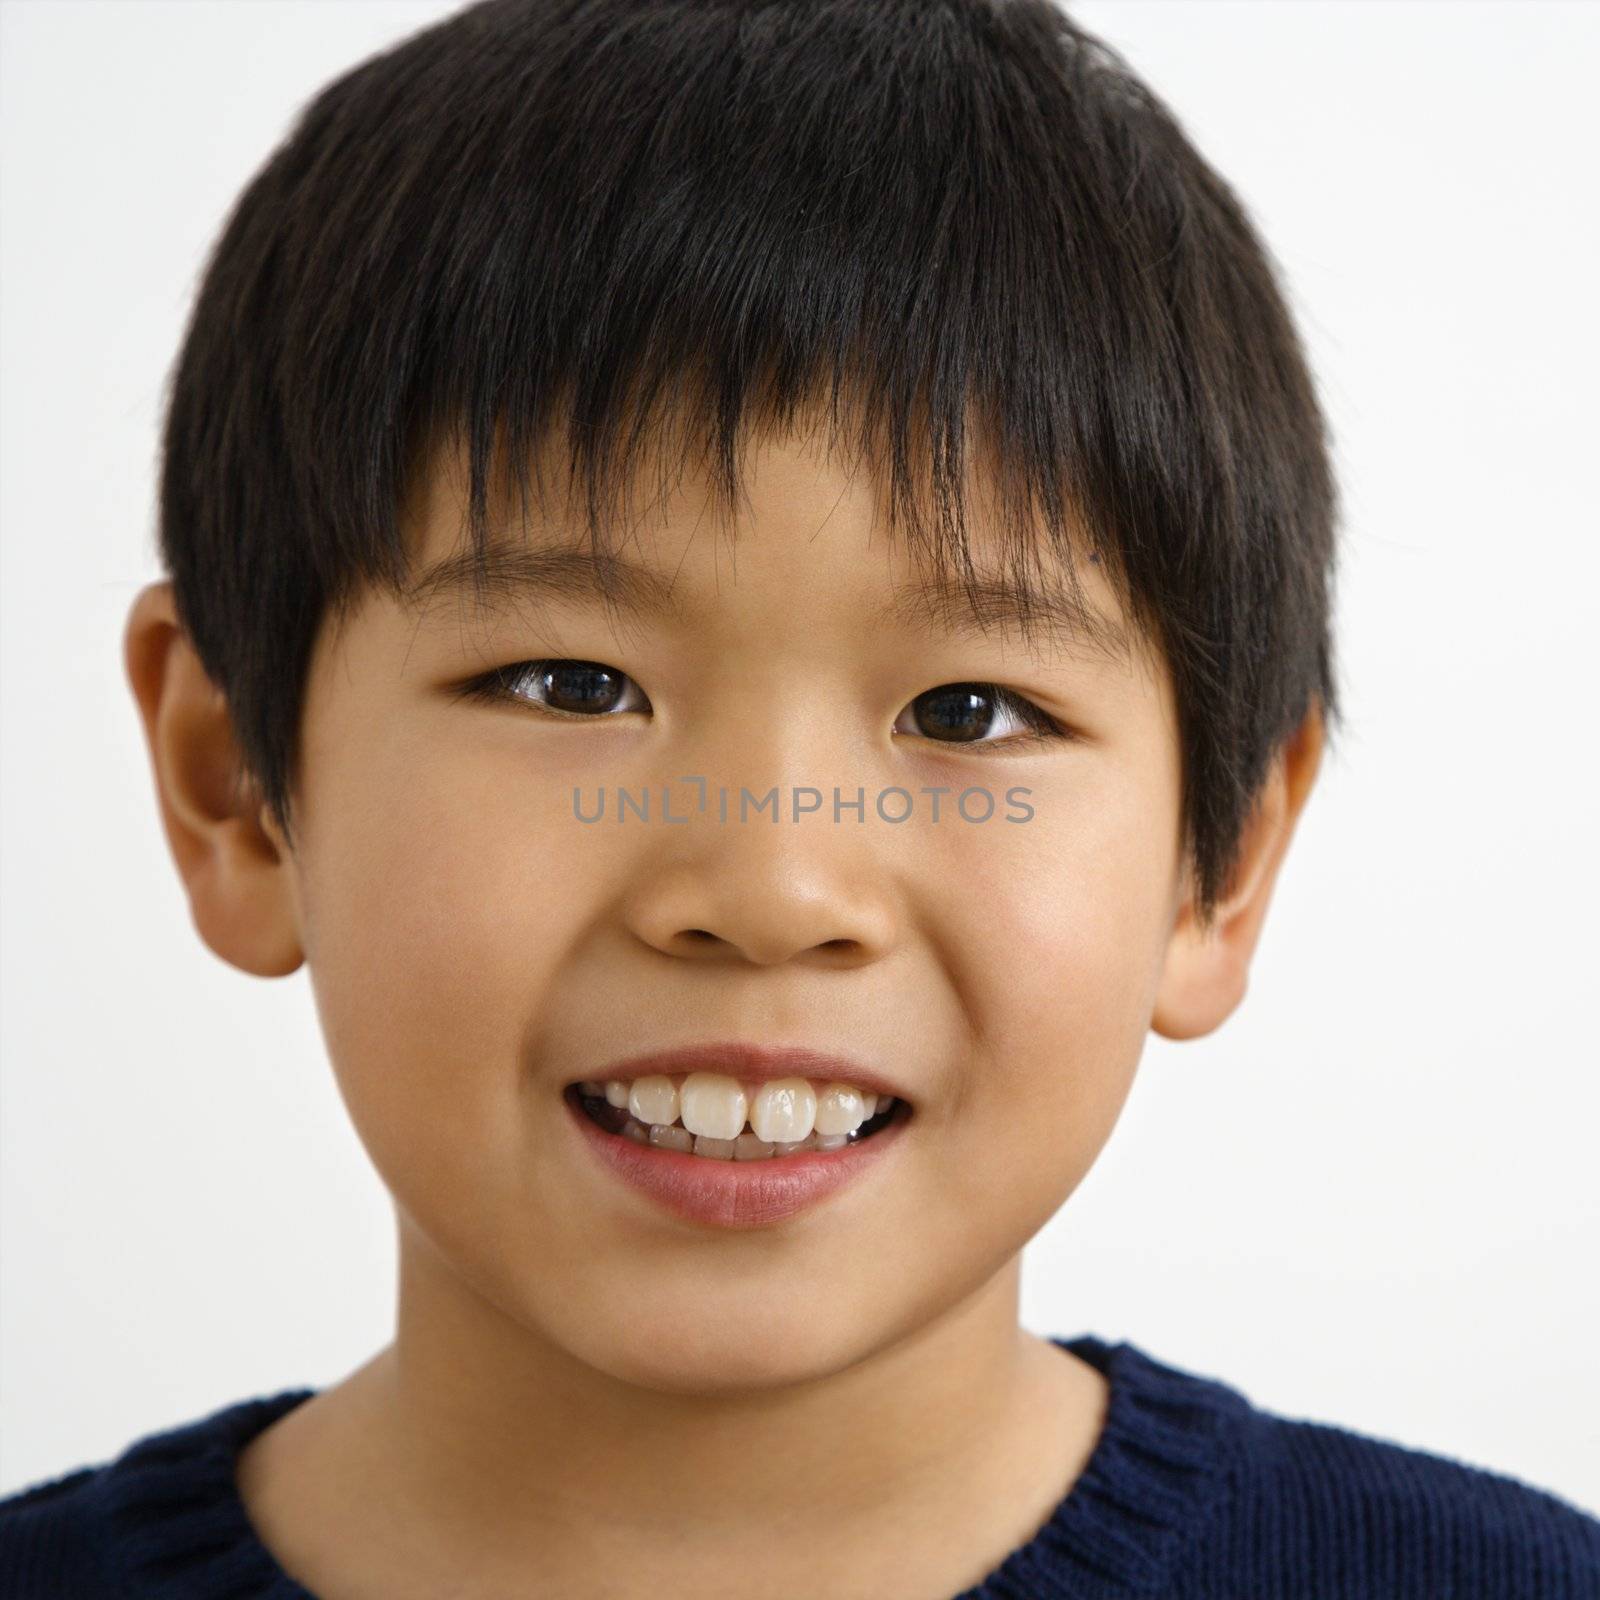 Young boy portrait by iofoto